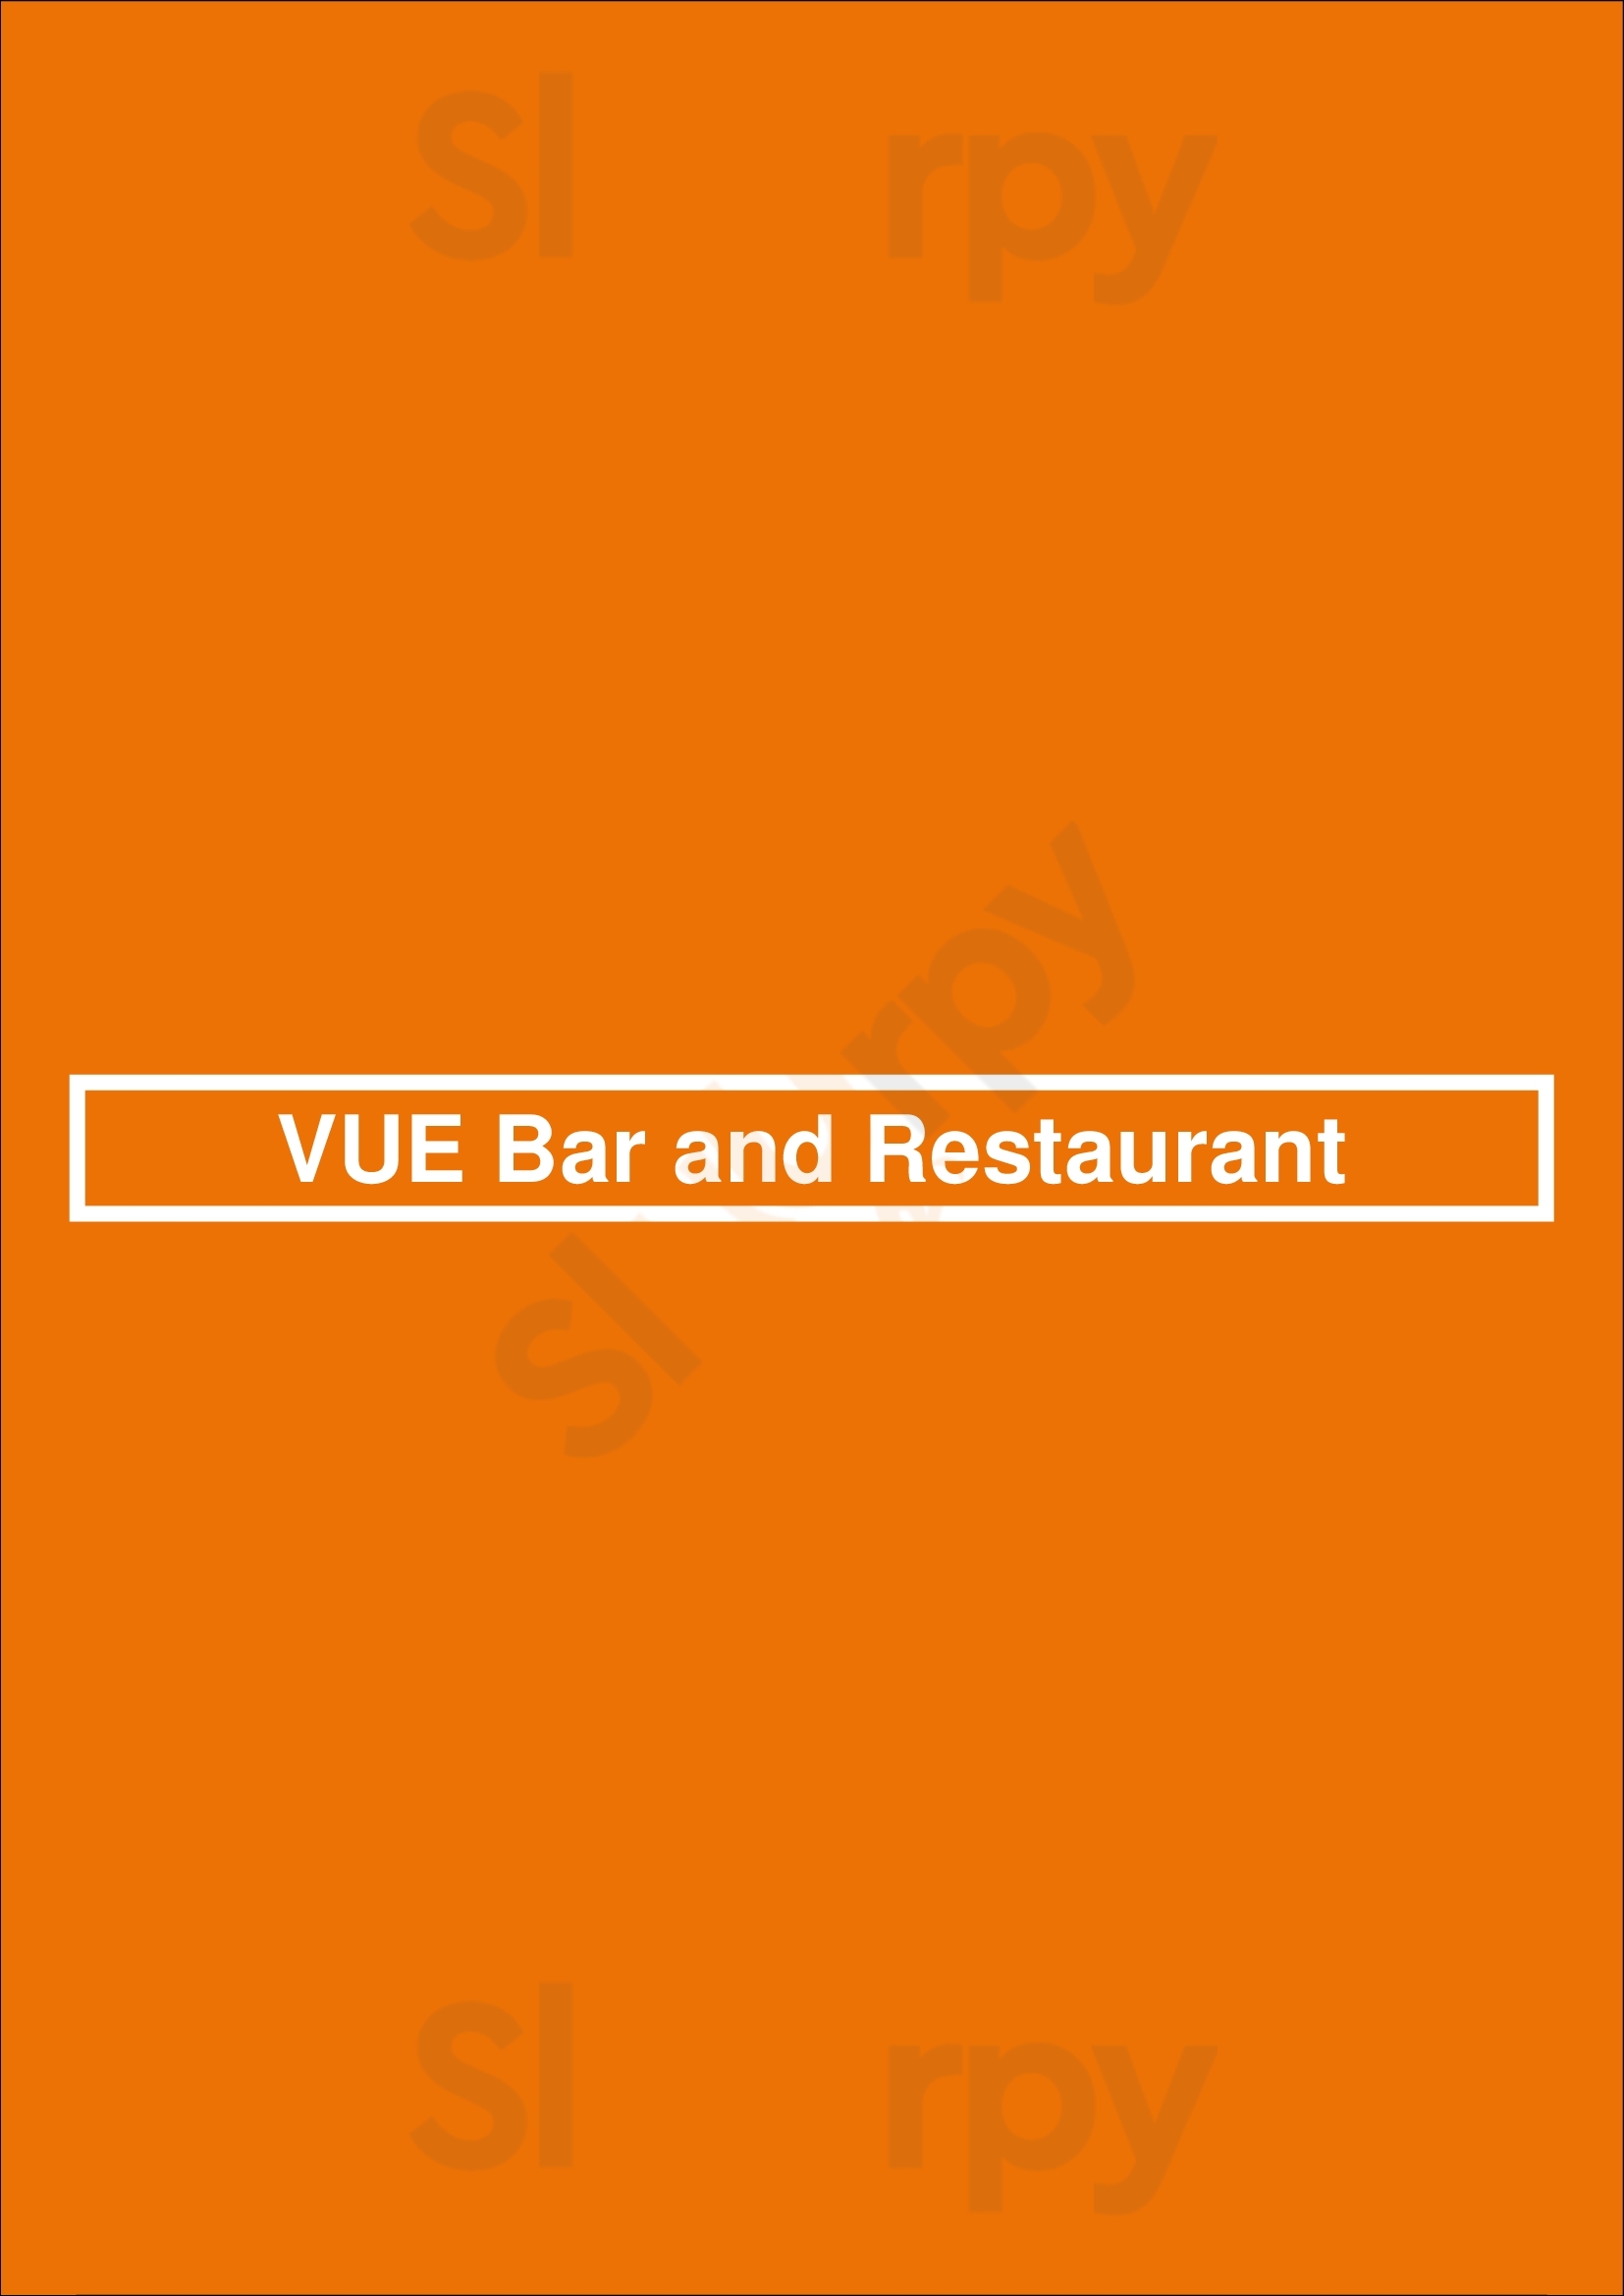 Vue Bar And Restaurant Long Beach Menu - 1